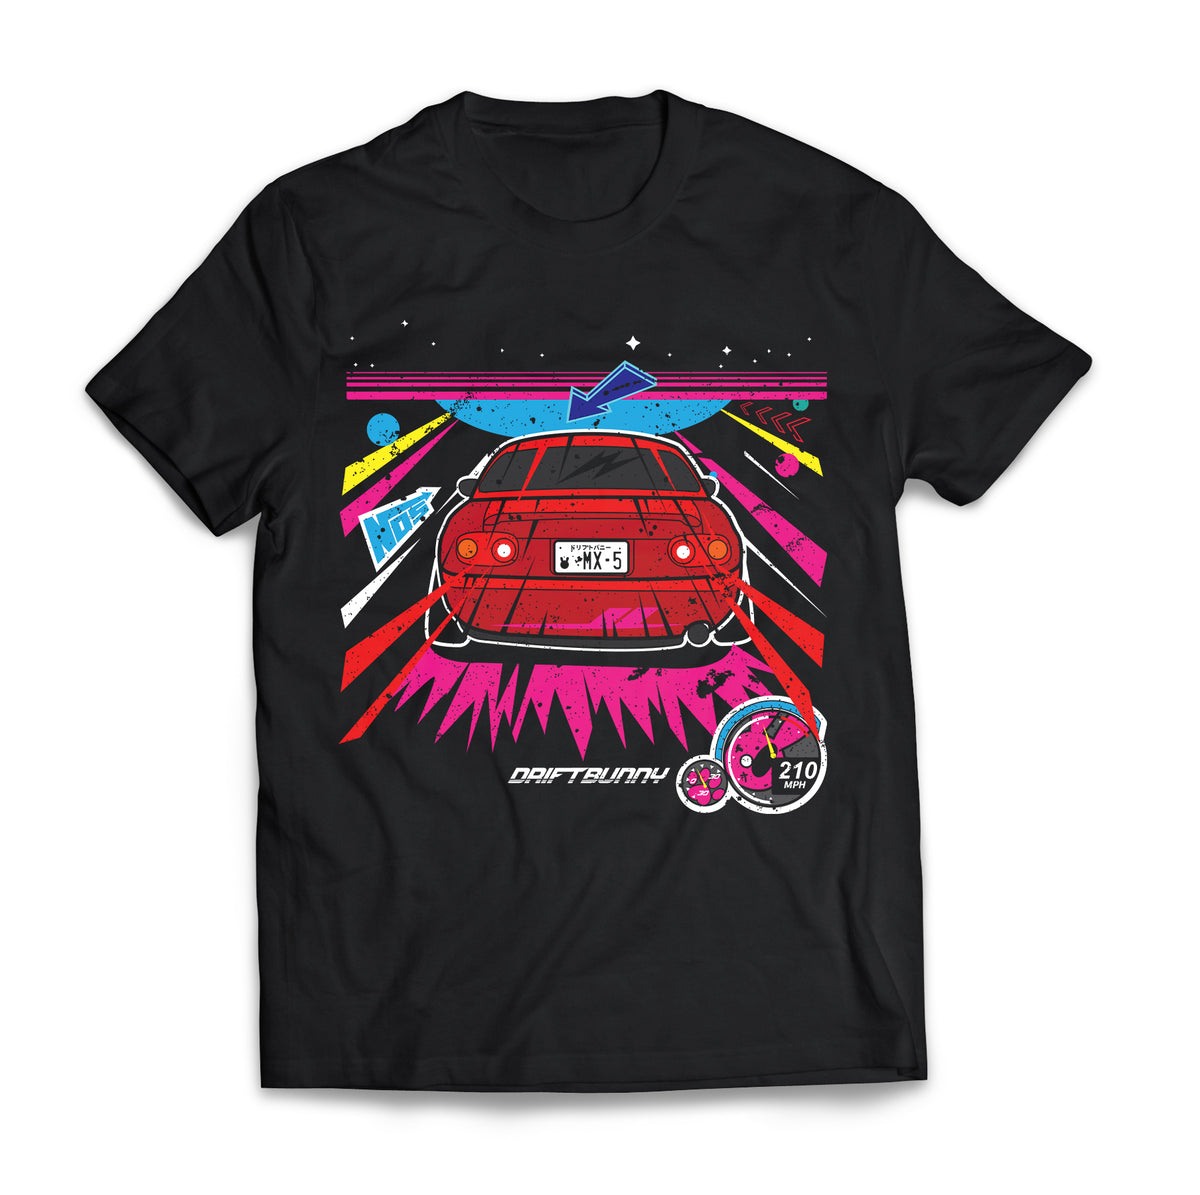 Gaming Nostalgic Drives - red Mx5 shirt